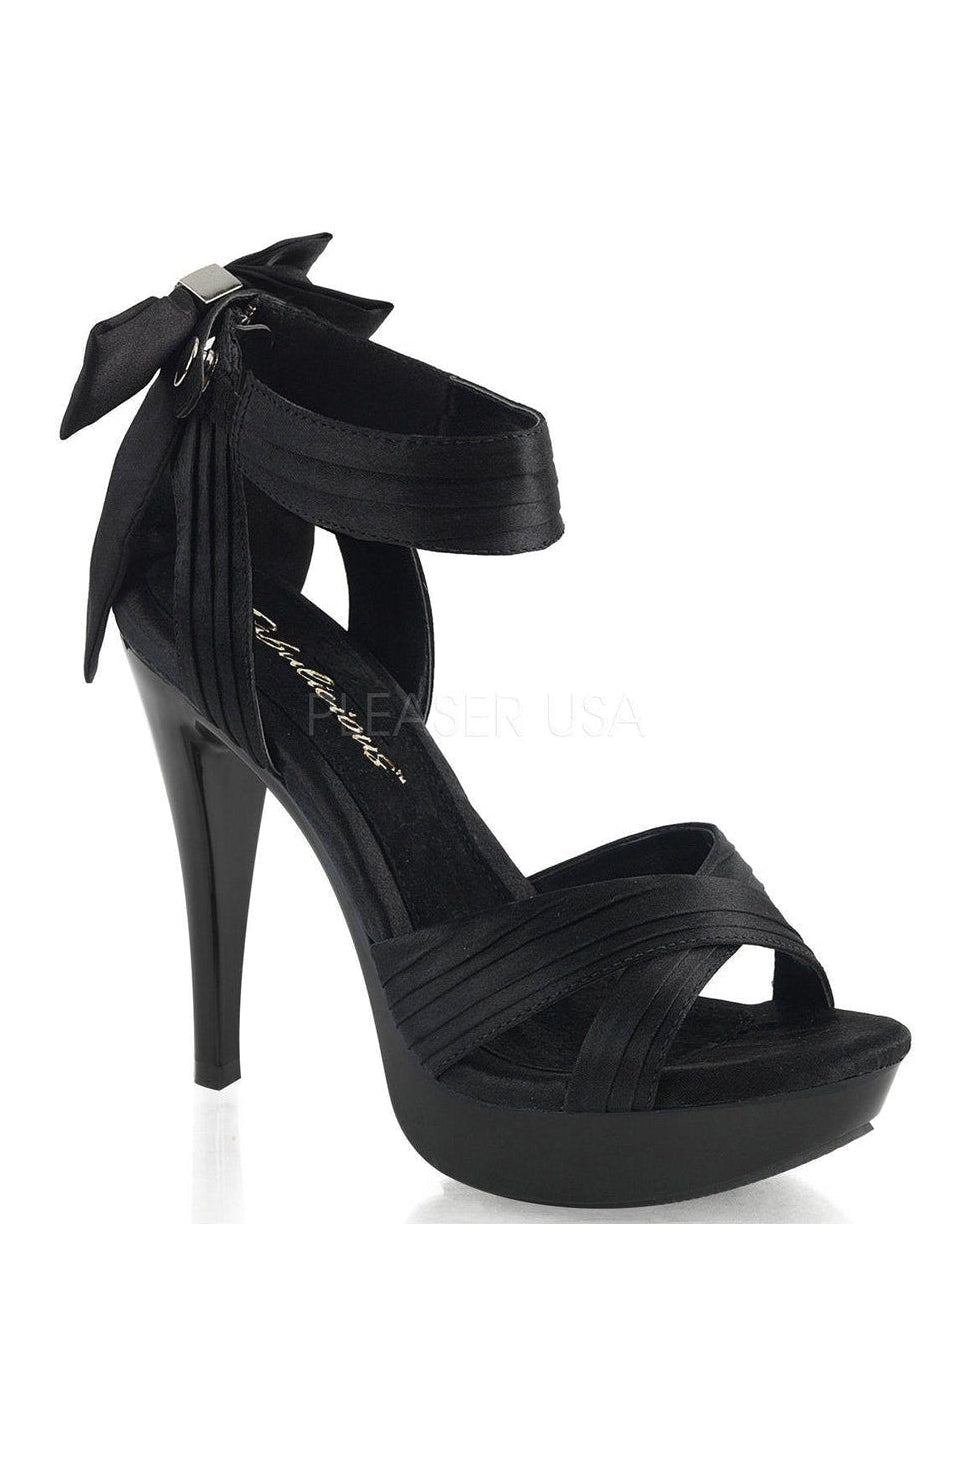 COCKTAIL-568 Sandal | Black Fabric-Fabulicious-Black-Sandals-SEXYSHOES.COM